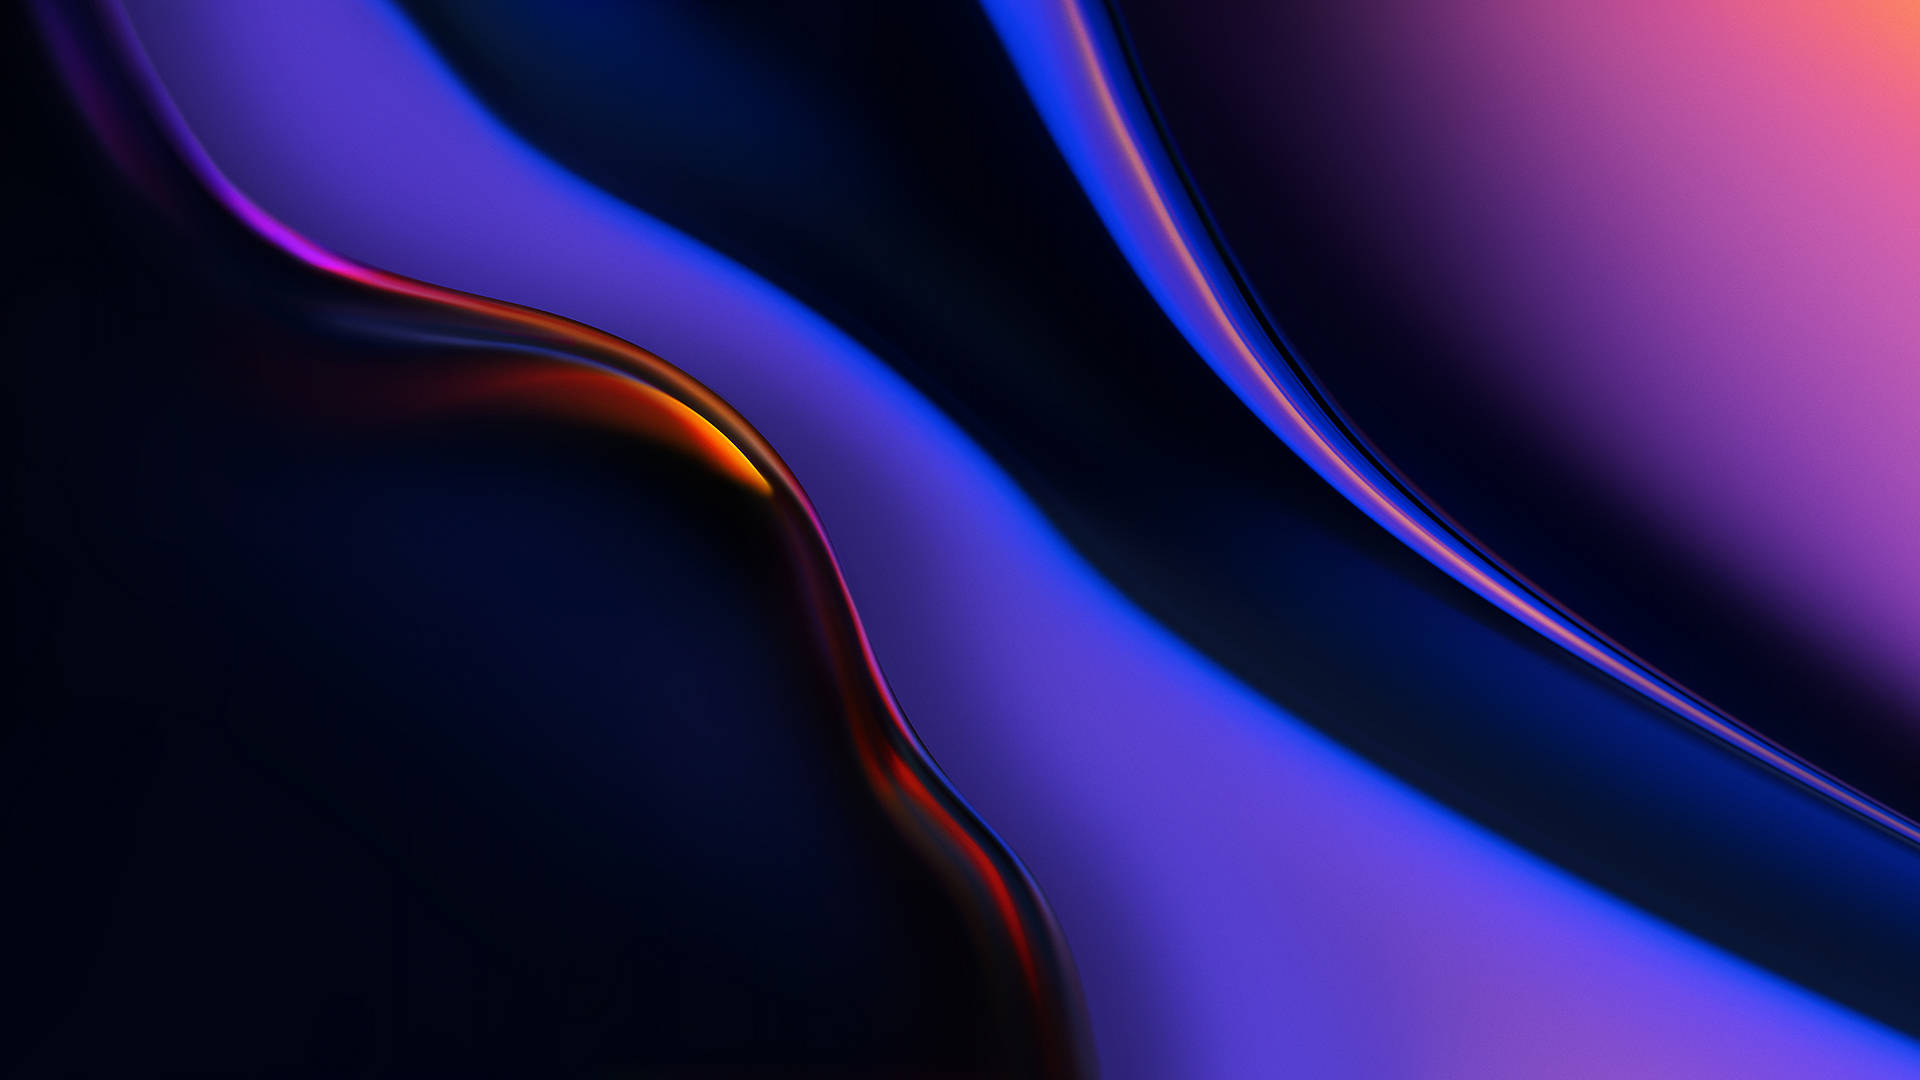 Sleek Oneplus Smartphone On A Blue Violet Background Background